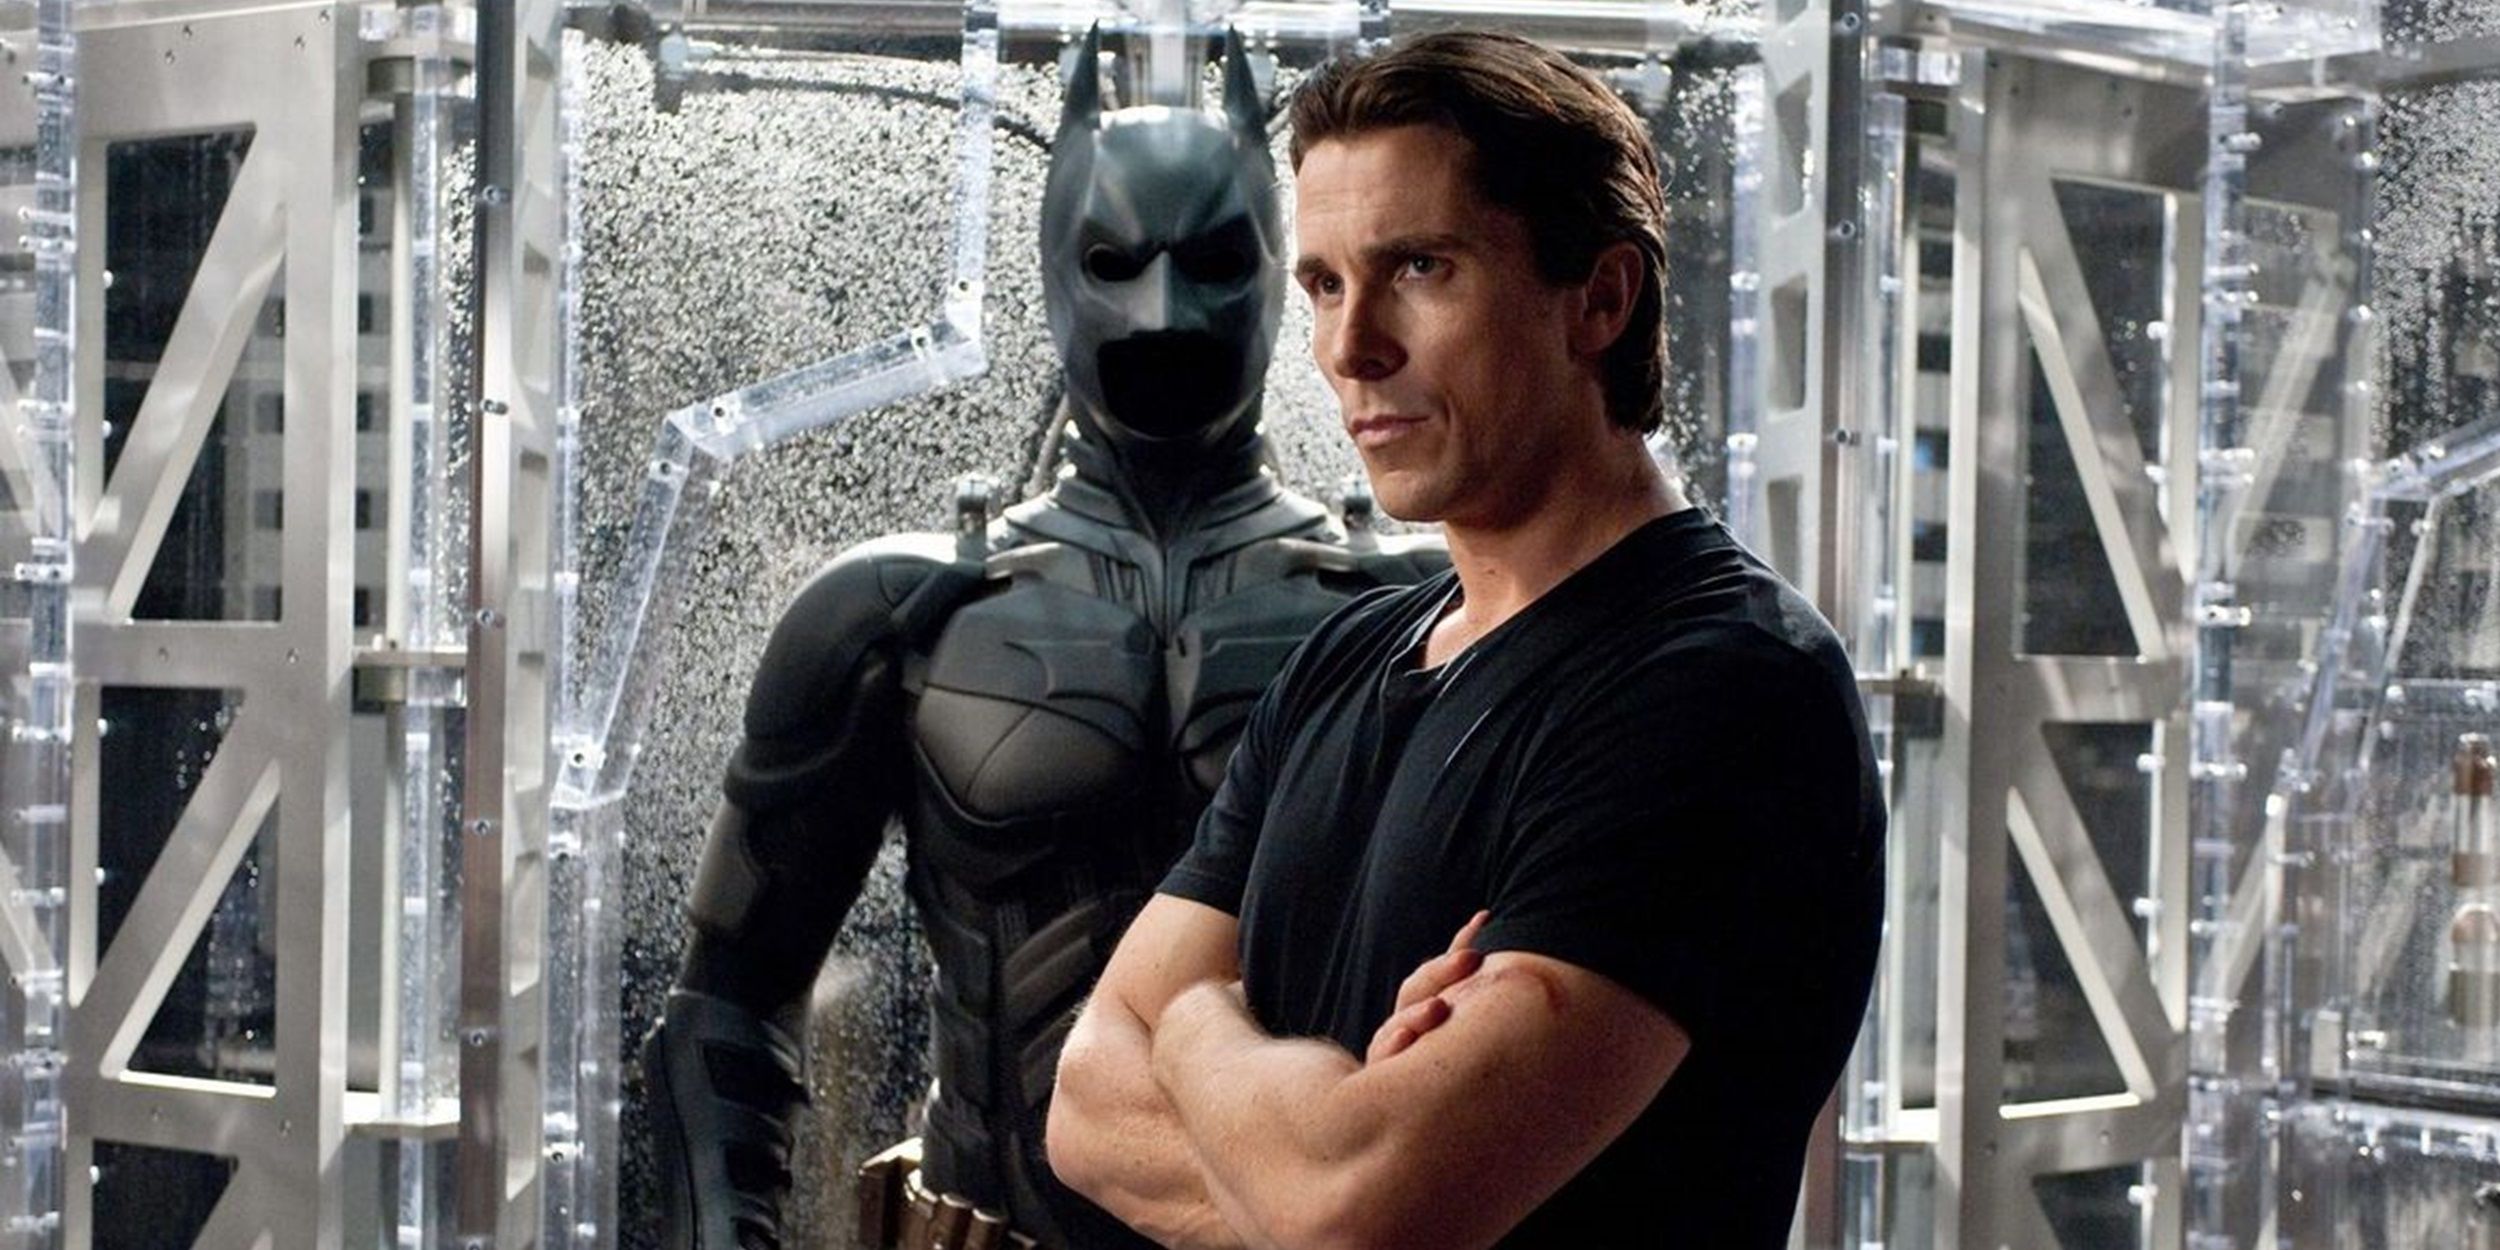 Christian Bale as Bruce Wayne in The Dark Knight Rises